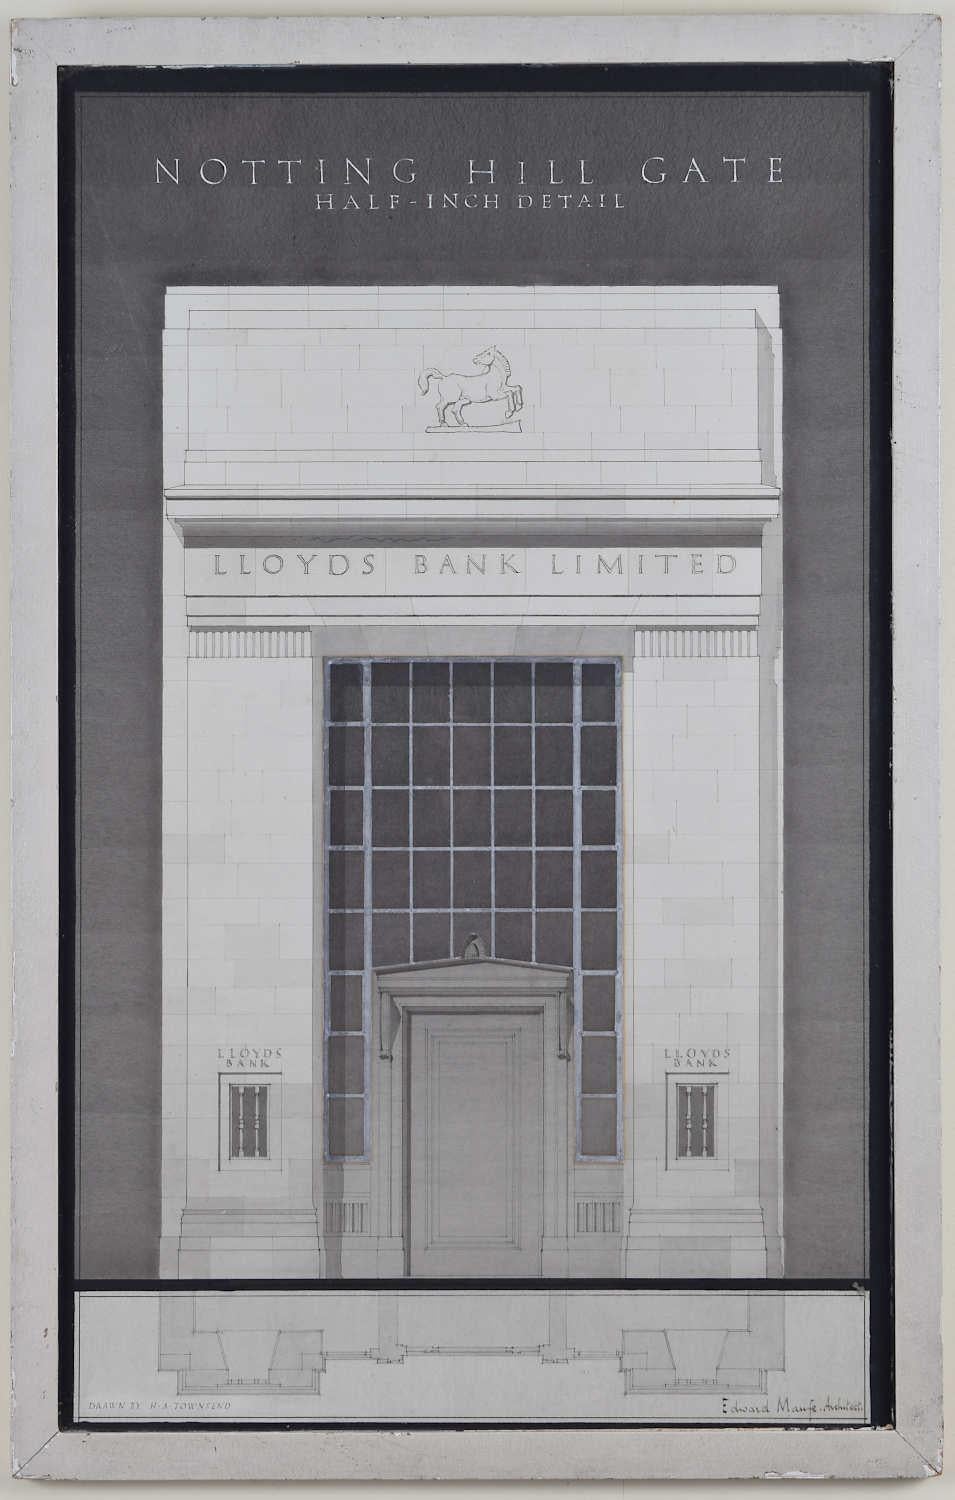 Edward Maufe RA FRIBA: „Design für Lloyds Bank, Notting Hill Gate“  (c.1930) im Angebot 4